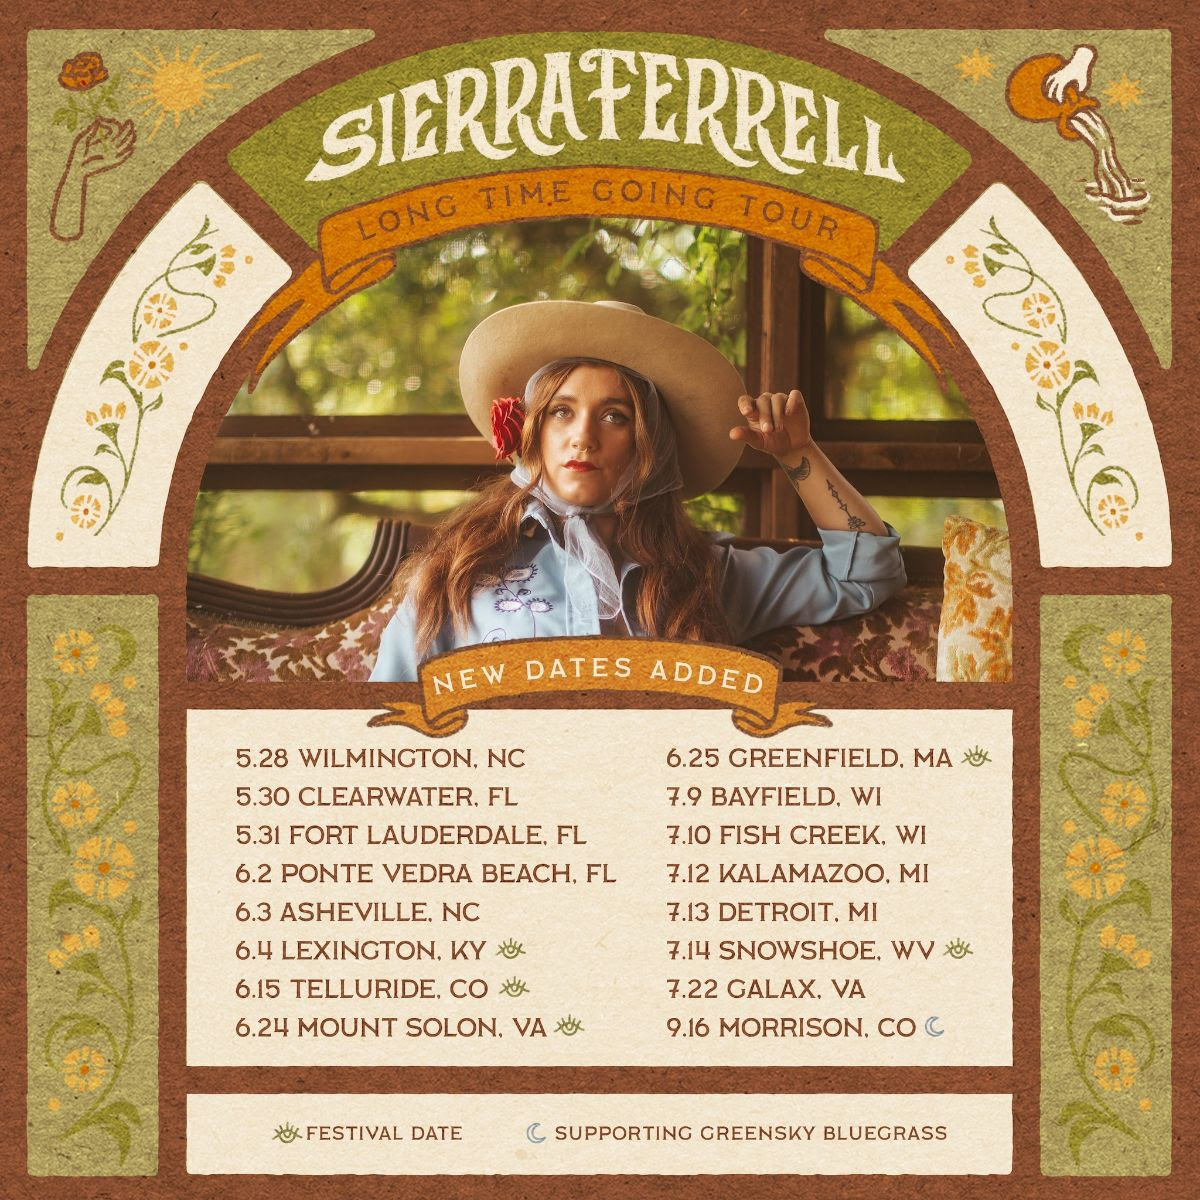 Sierra Ferrell - Long Time Going Tour